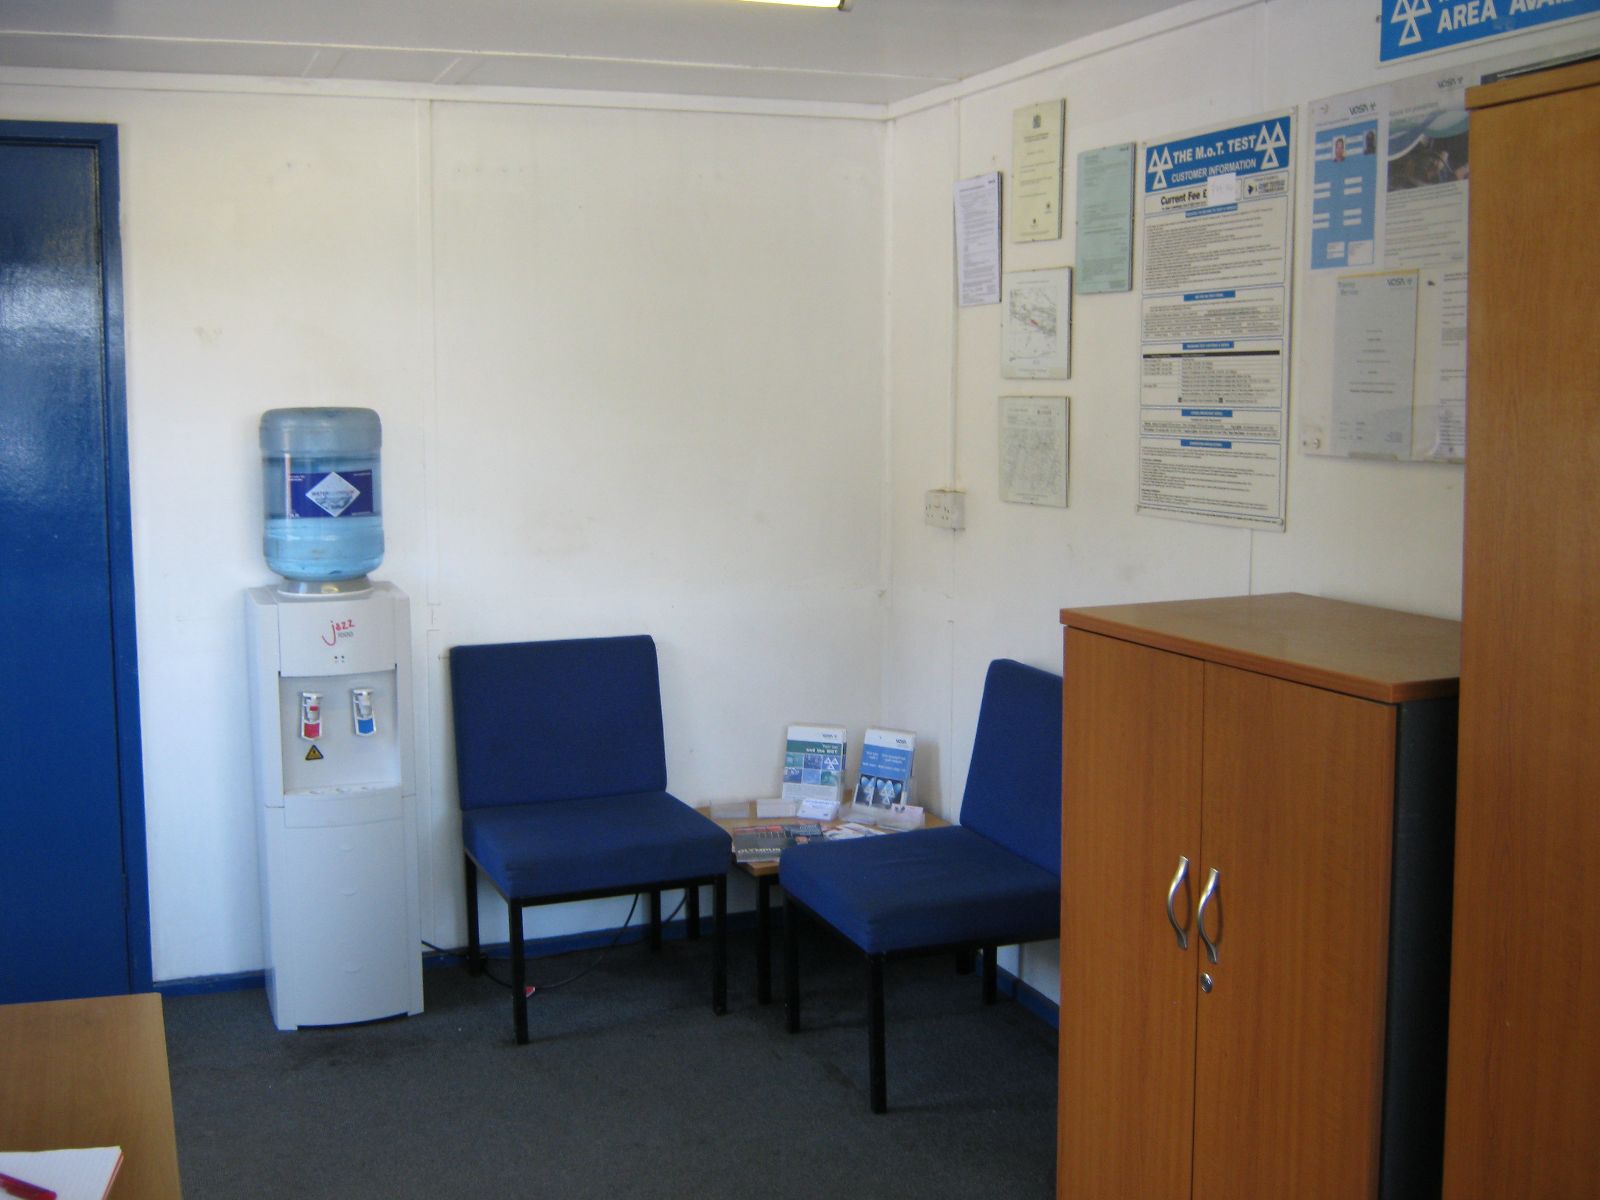 Customer waiting room with coffee facilities